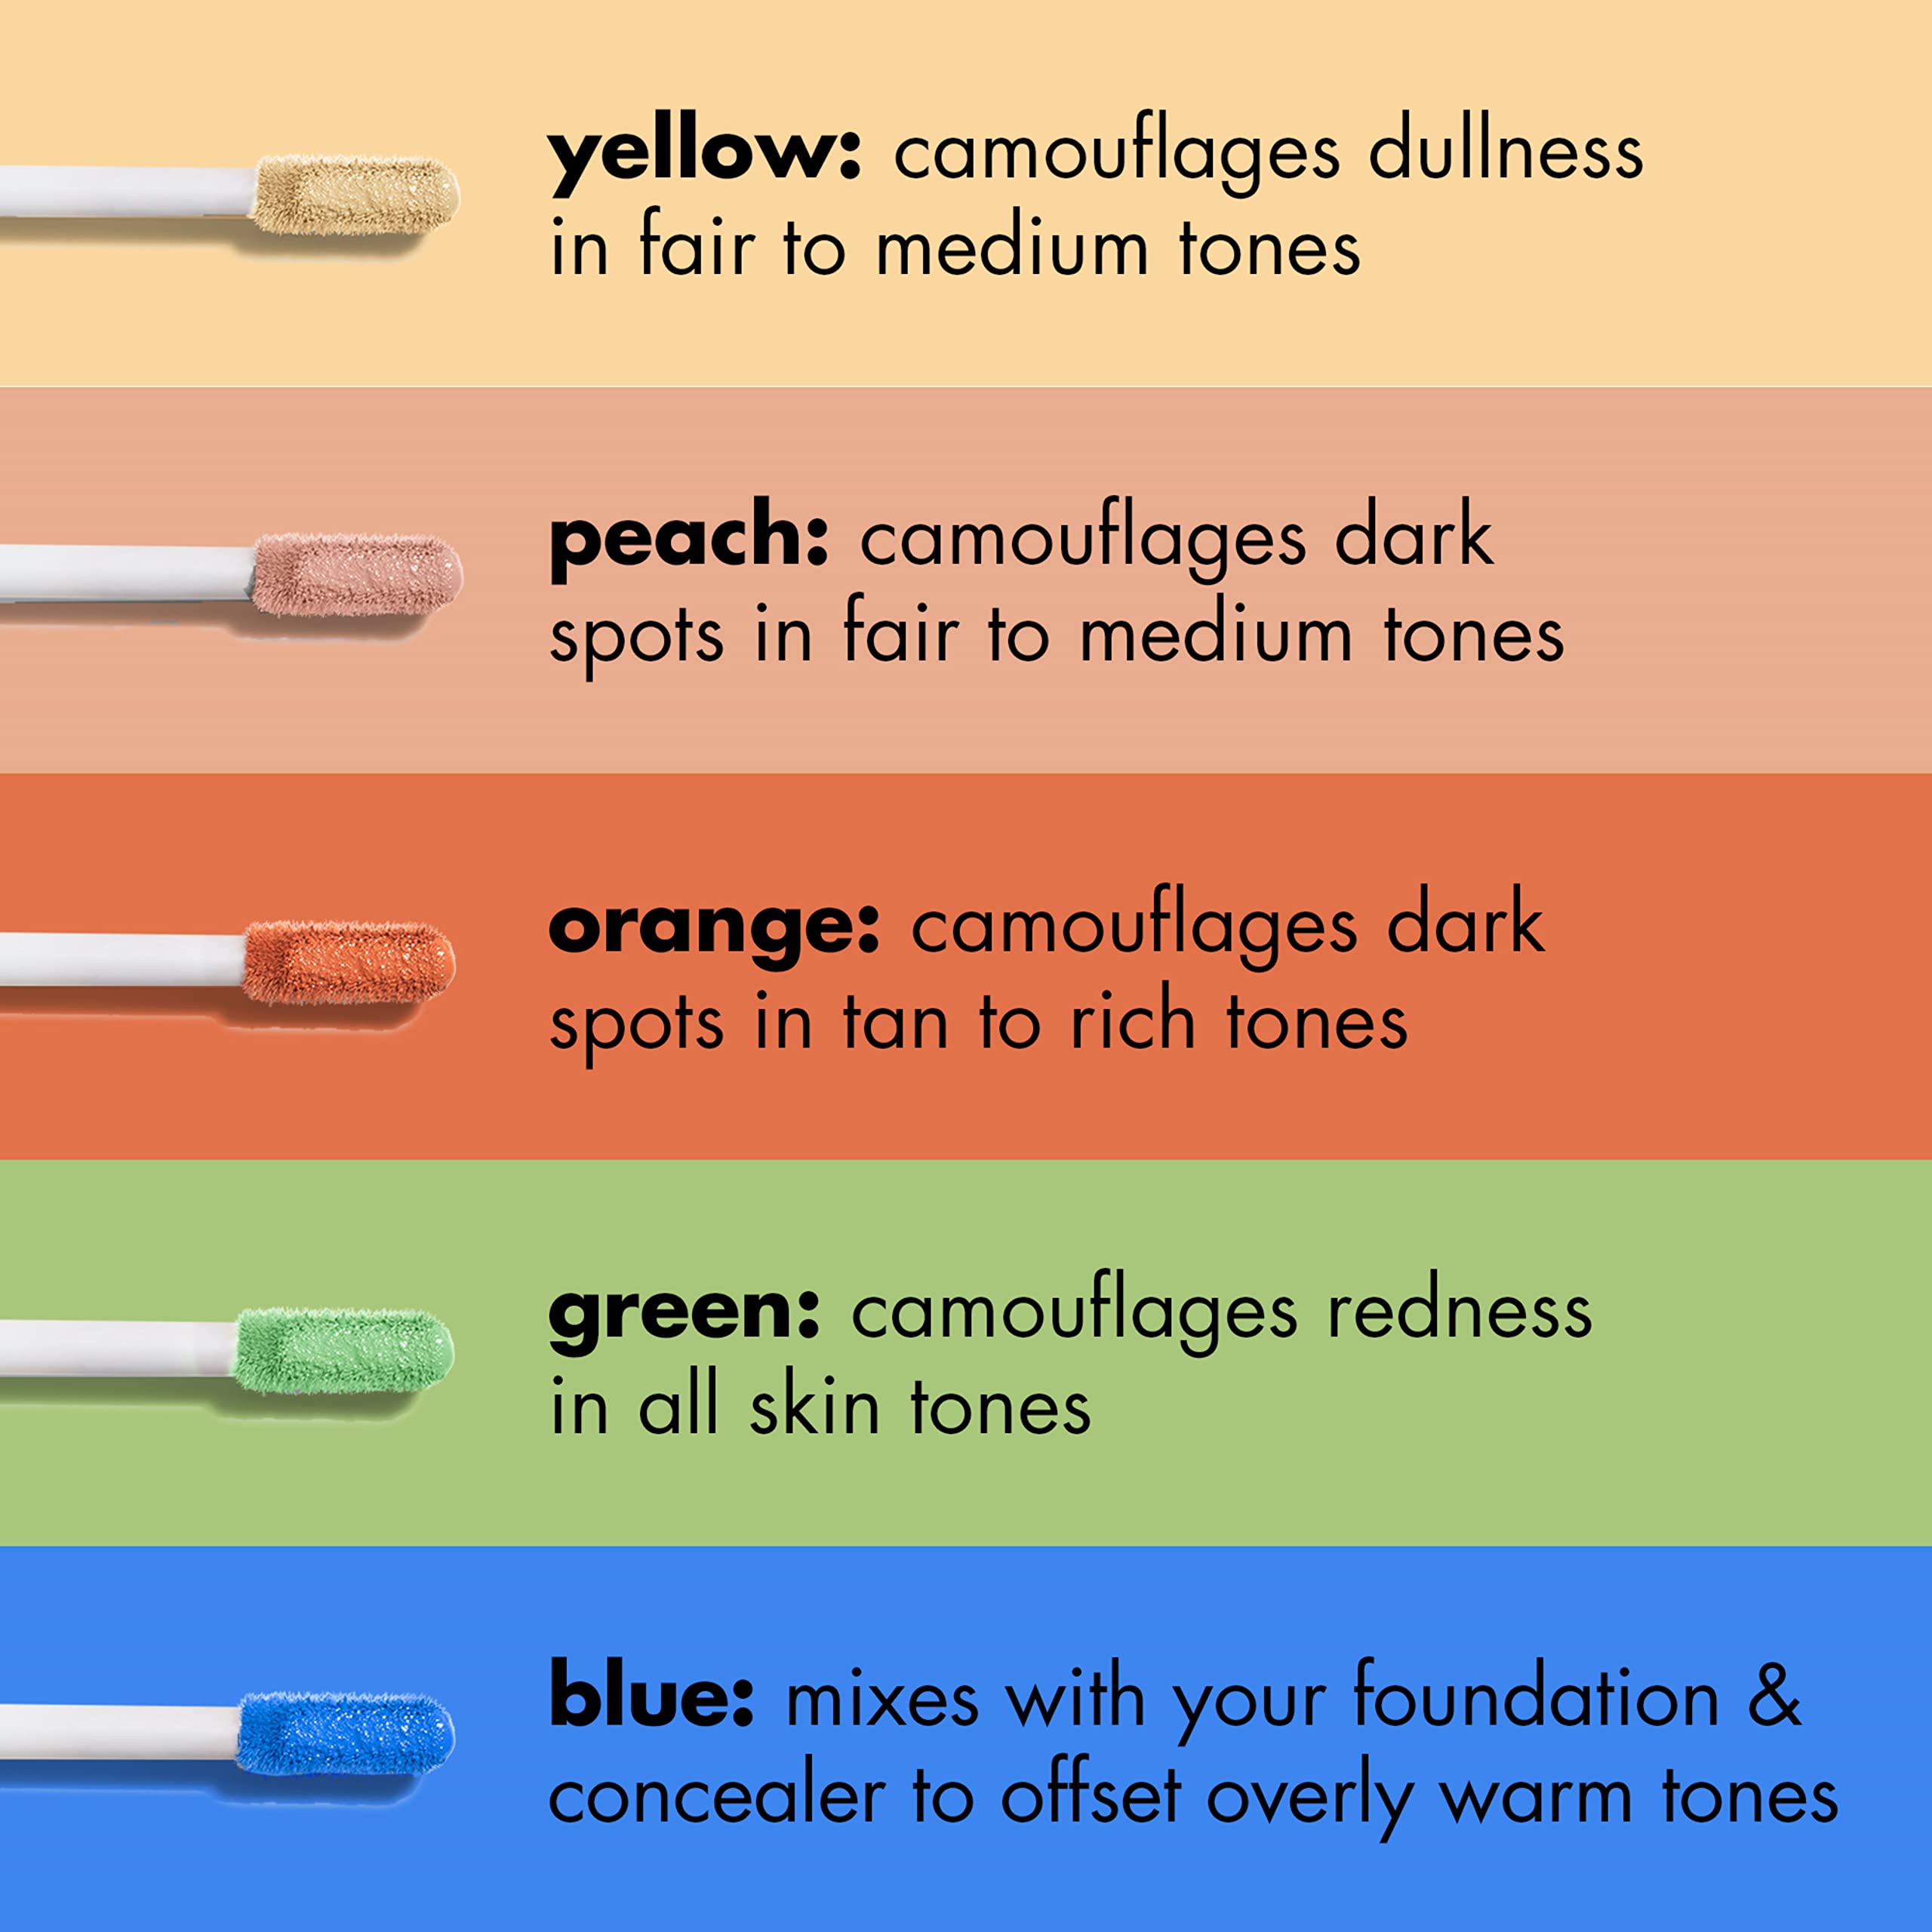 e.l.f. Camo Color Corrector, Hydrating & Long-Lasting Color Corrector For Camouflaging Discoloration, Dullness & Redness, Vegan & Cruelty-Free, Orange